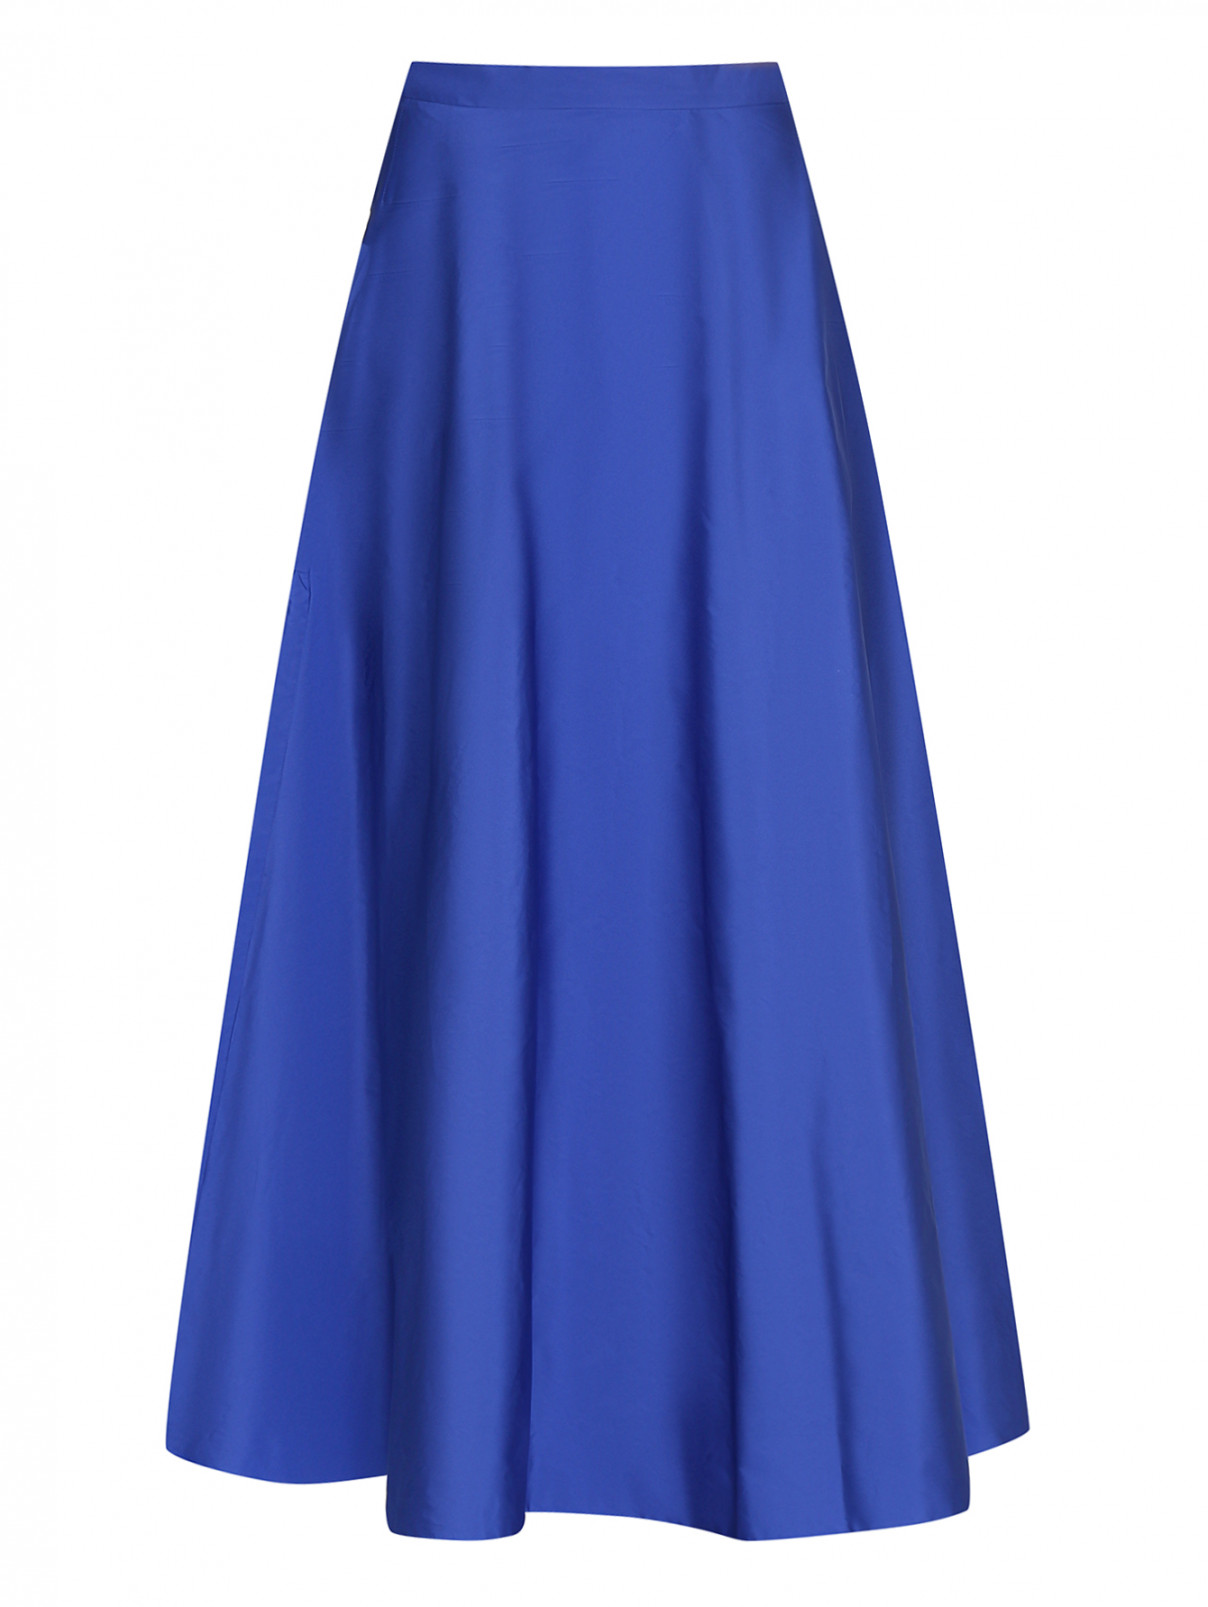 Юбка свободного кроя с карманами Max Mara  –  Общий вид  – Цвет:  Синий